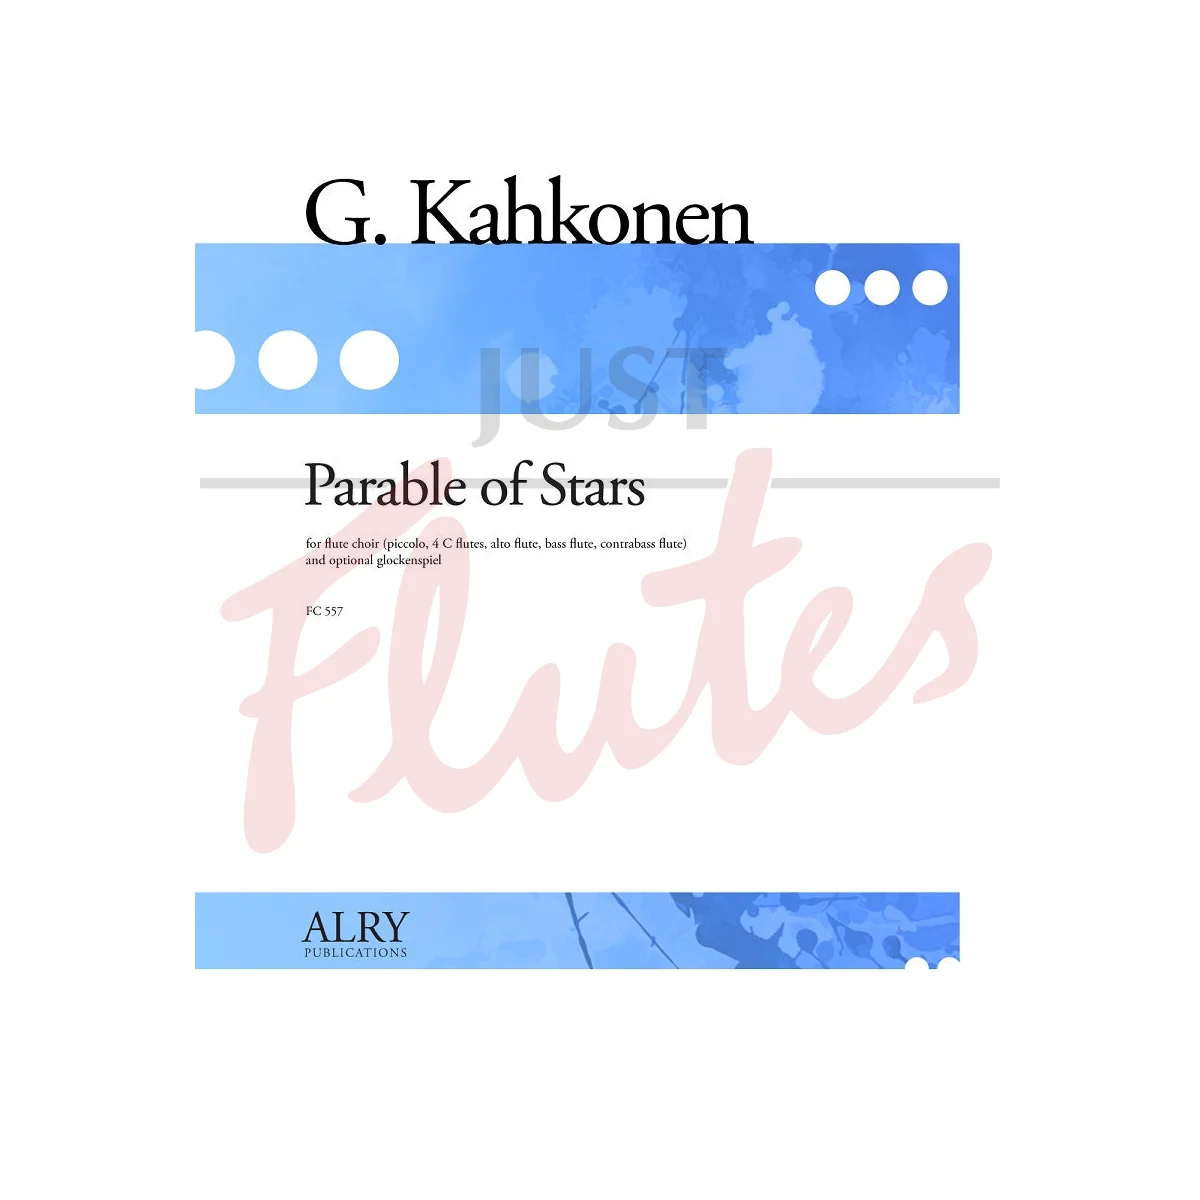 Parable of Stars for Flute Choir